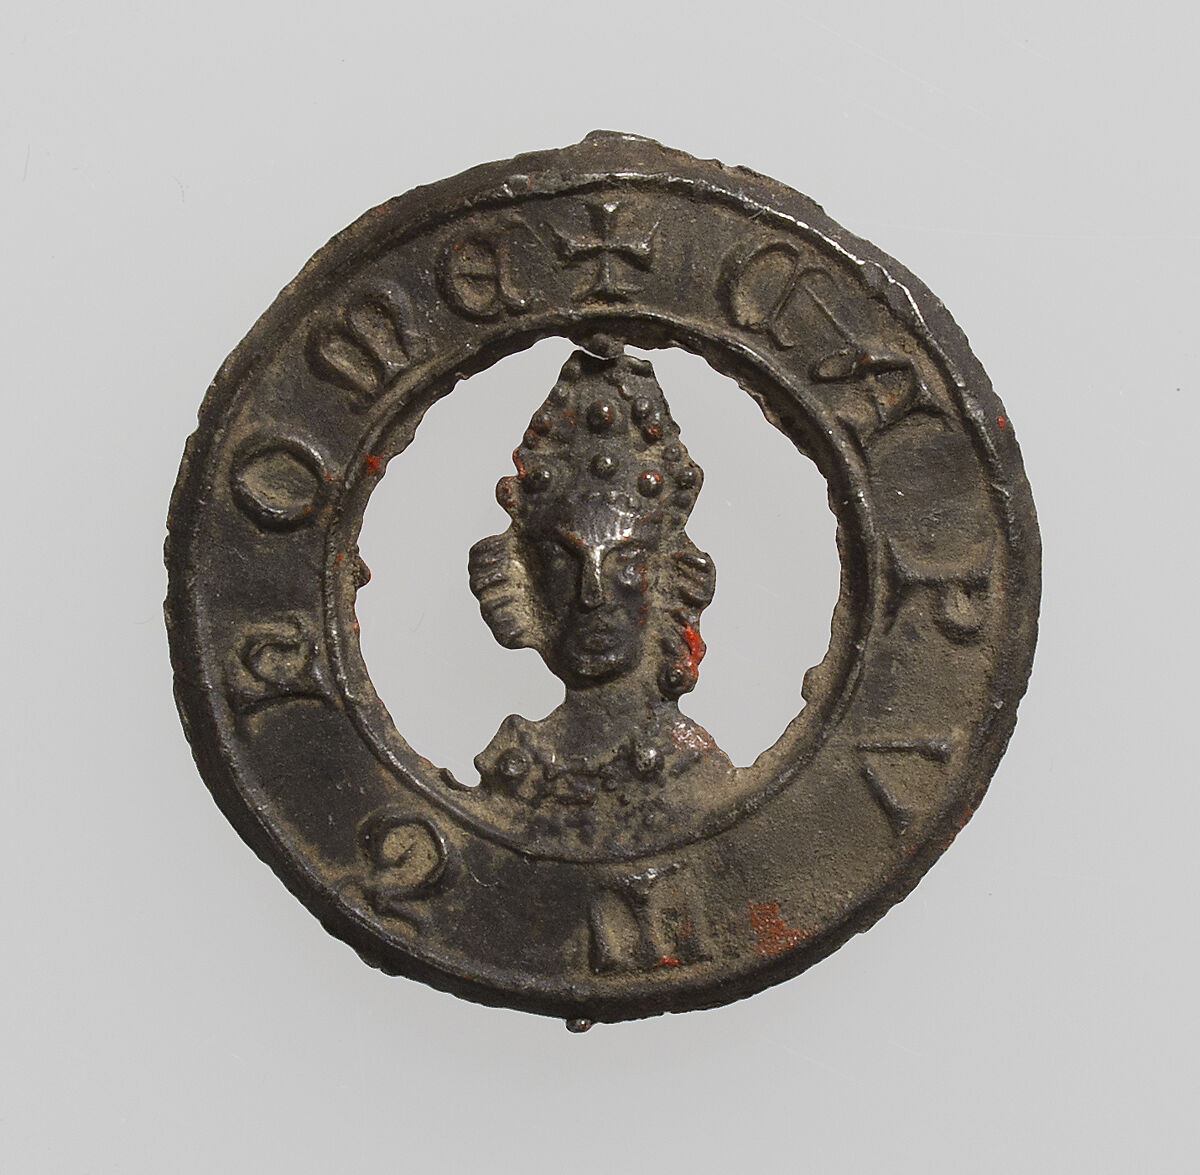 Pilgrim's Badge with head of Saint Thomas à Becket, Tin-lead alloy, British 